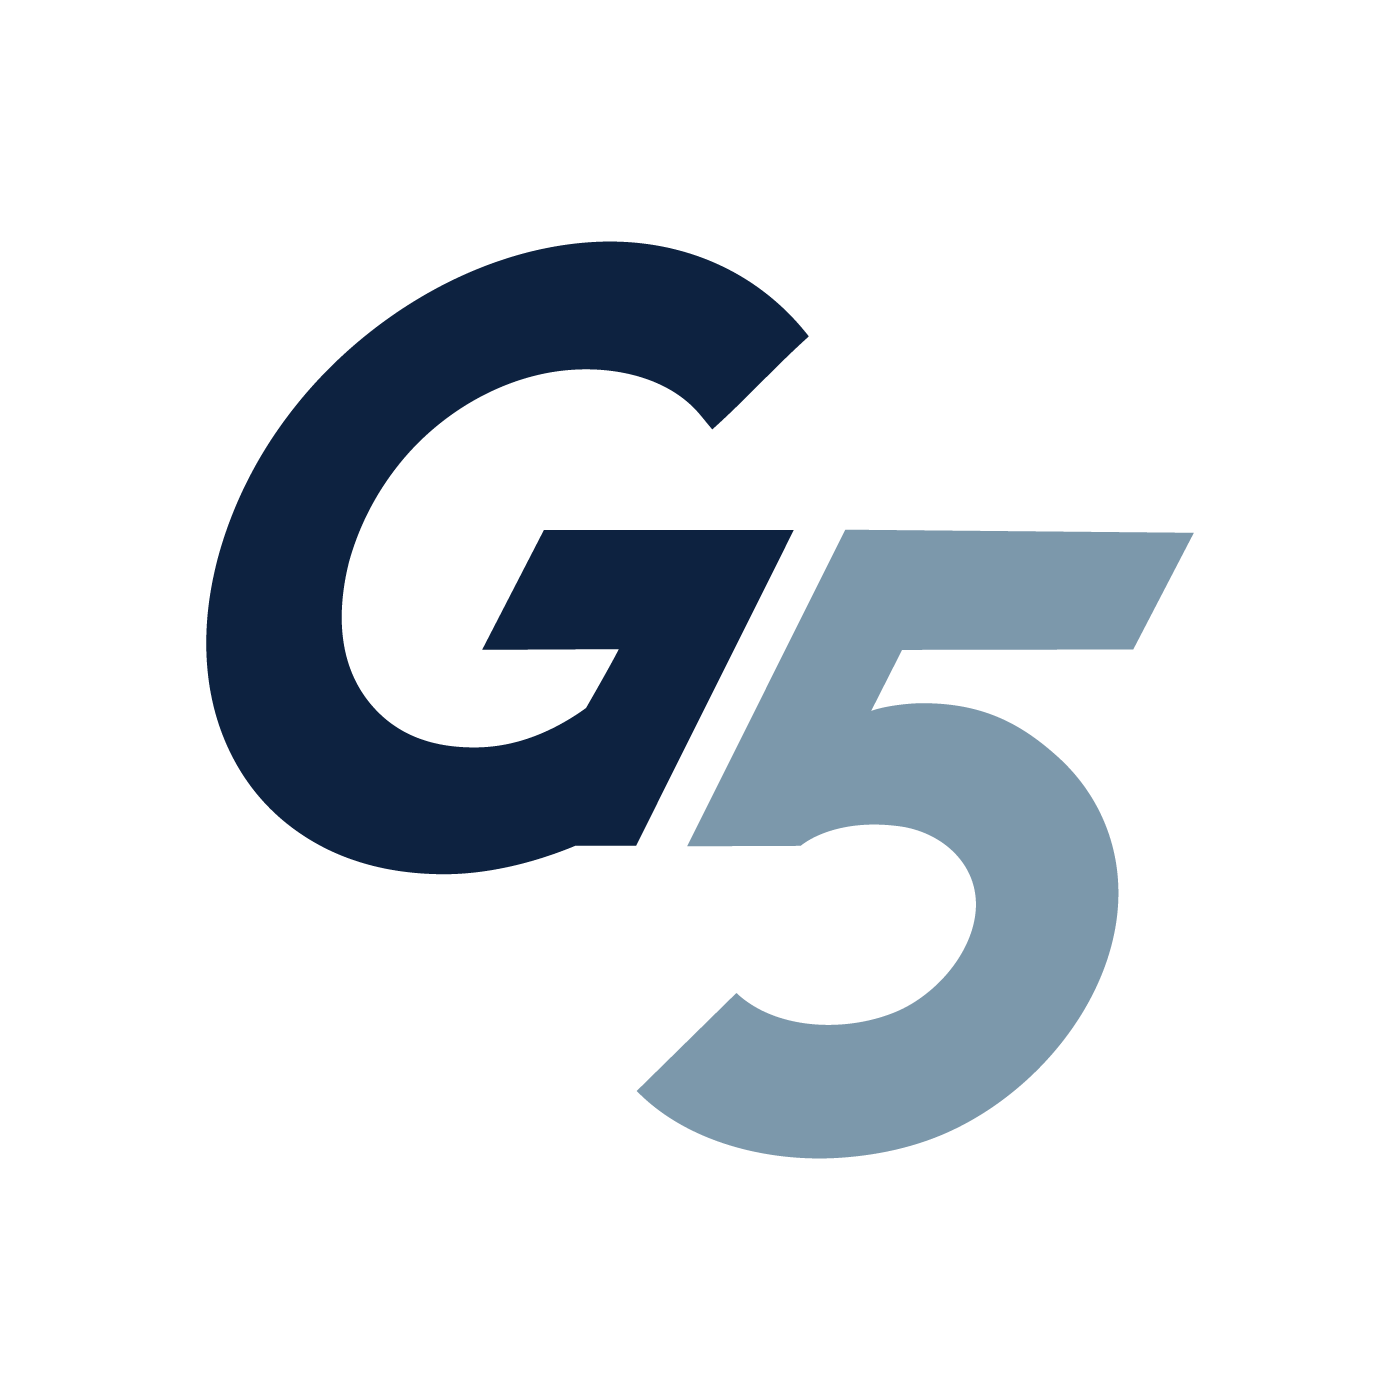 GetG5 logo